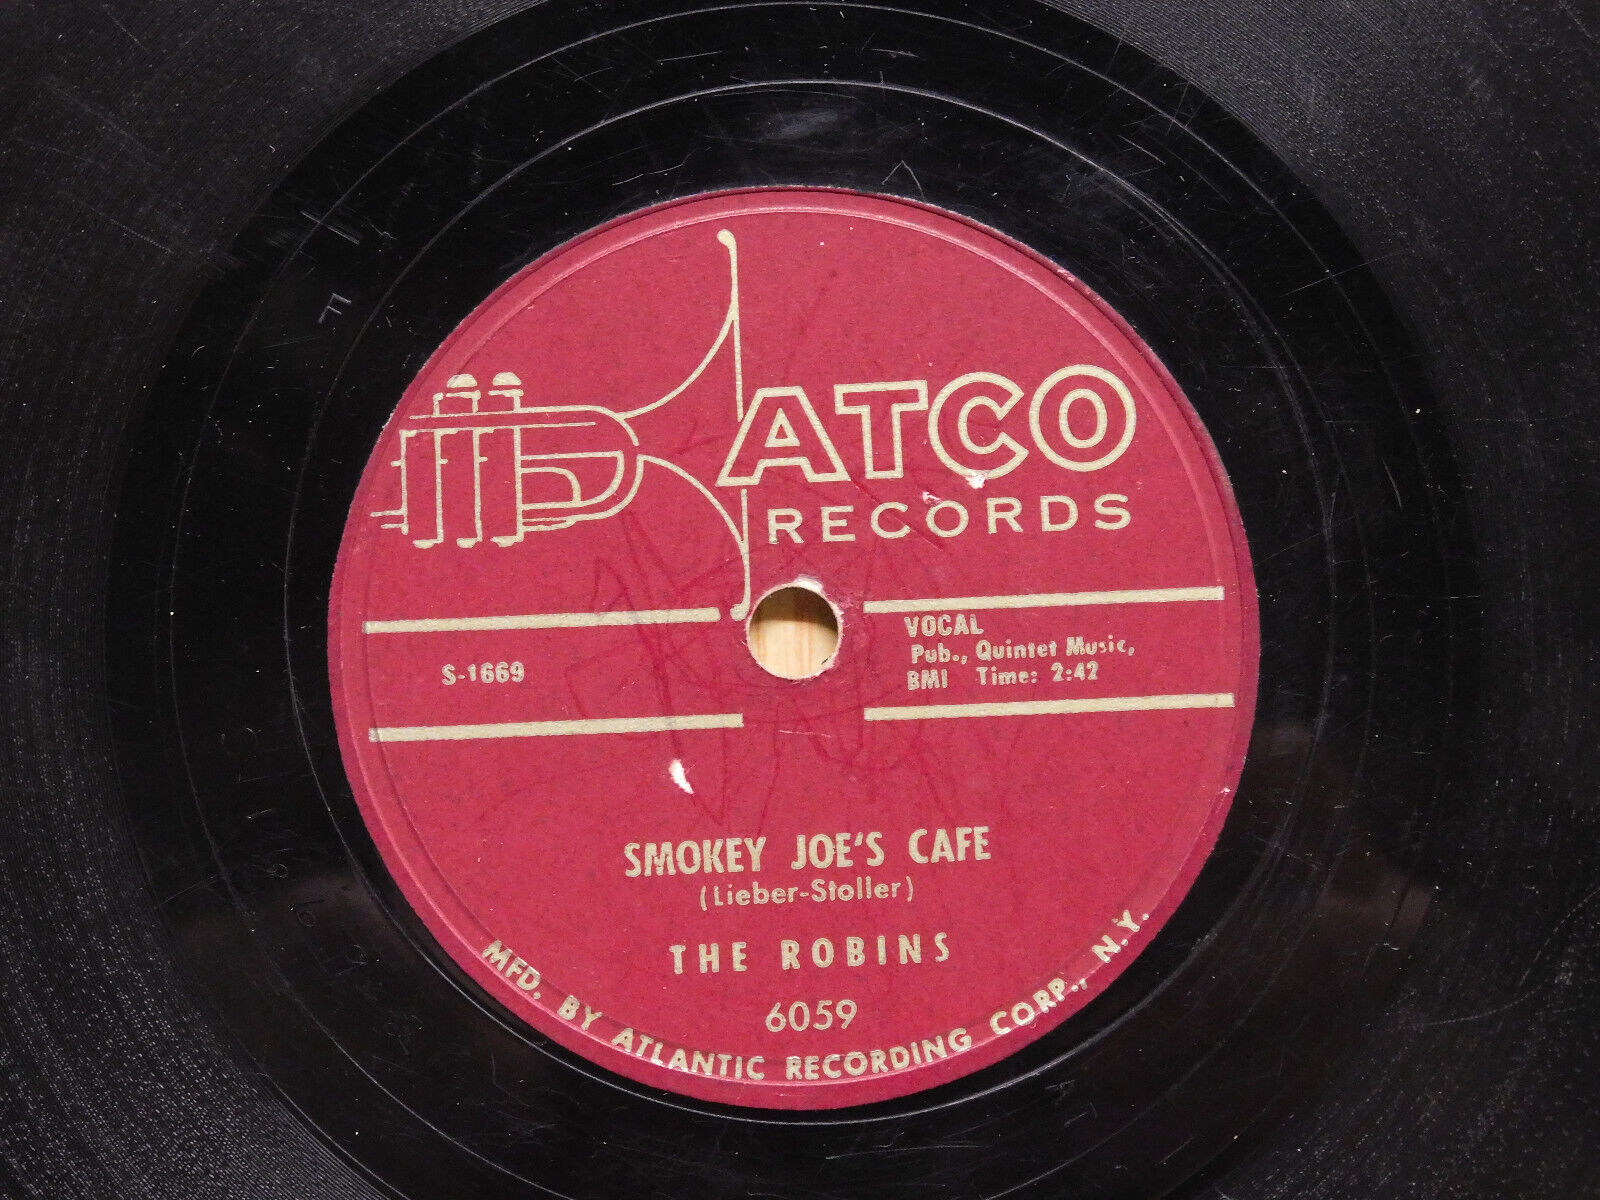 The Robins doo wop dvp 78 Just Like A Fool bw Smokey Joe's Cafe on ATCO Records